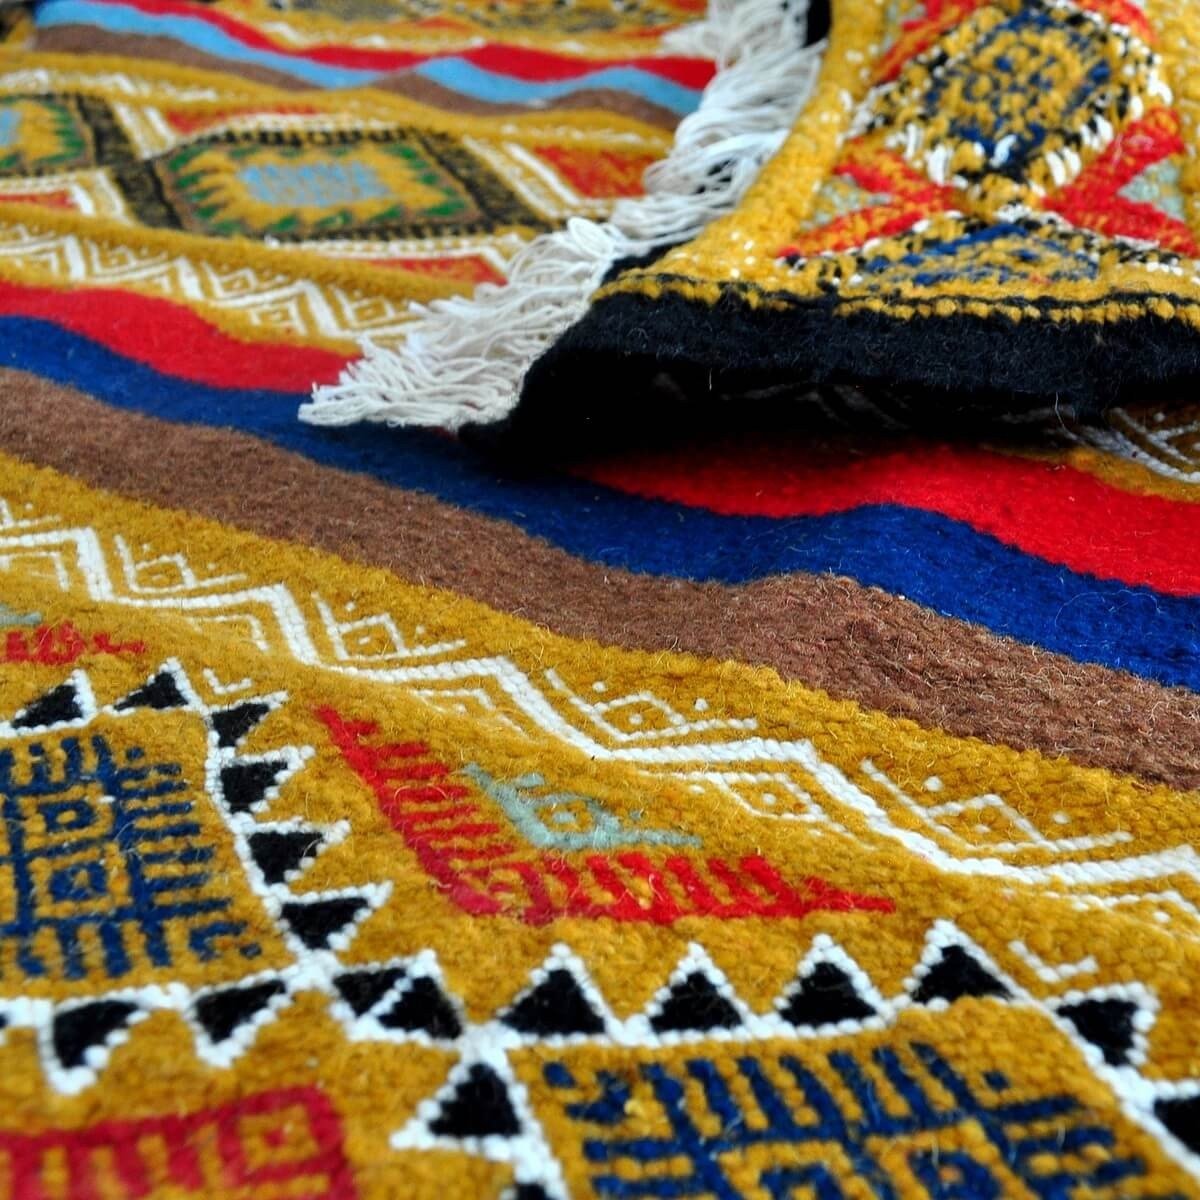 Berber tapijt Tapijt Kilim Chahloul 100x180 Jeel/Veelkleurig (Handgeweven, Wol, Tunesië) Tunesisch kilimdeken, Marokkaanse stijl